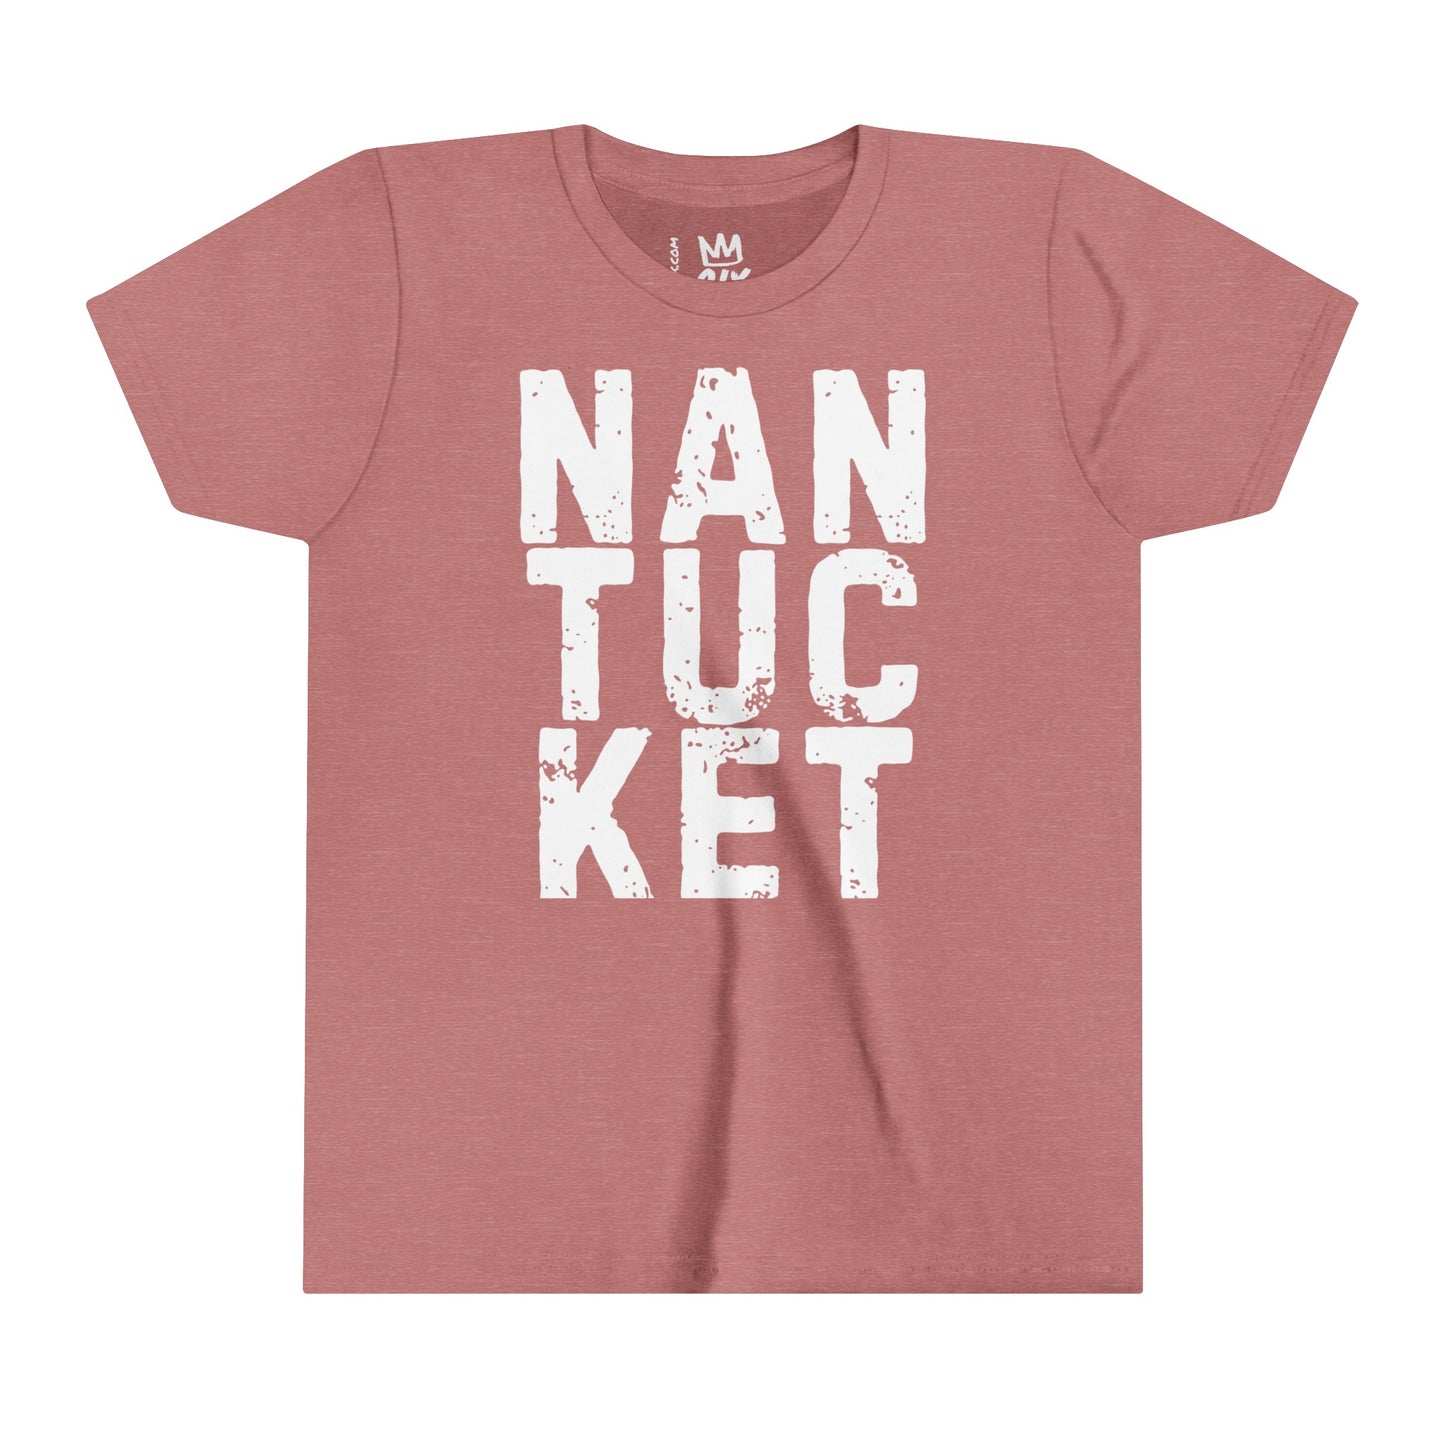 Kids Heather Blend Nantucket Short Sleeve Tee - Ultra-Soft, Durable & Stylish